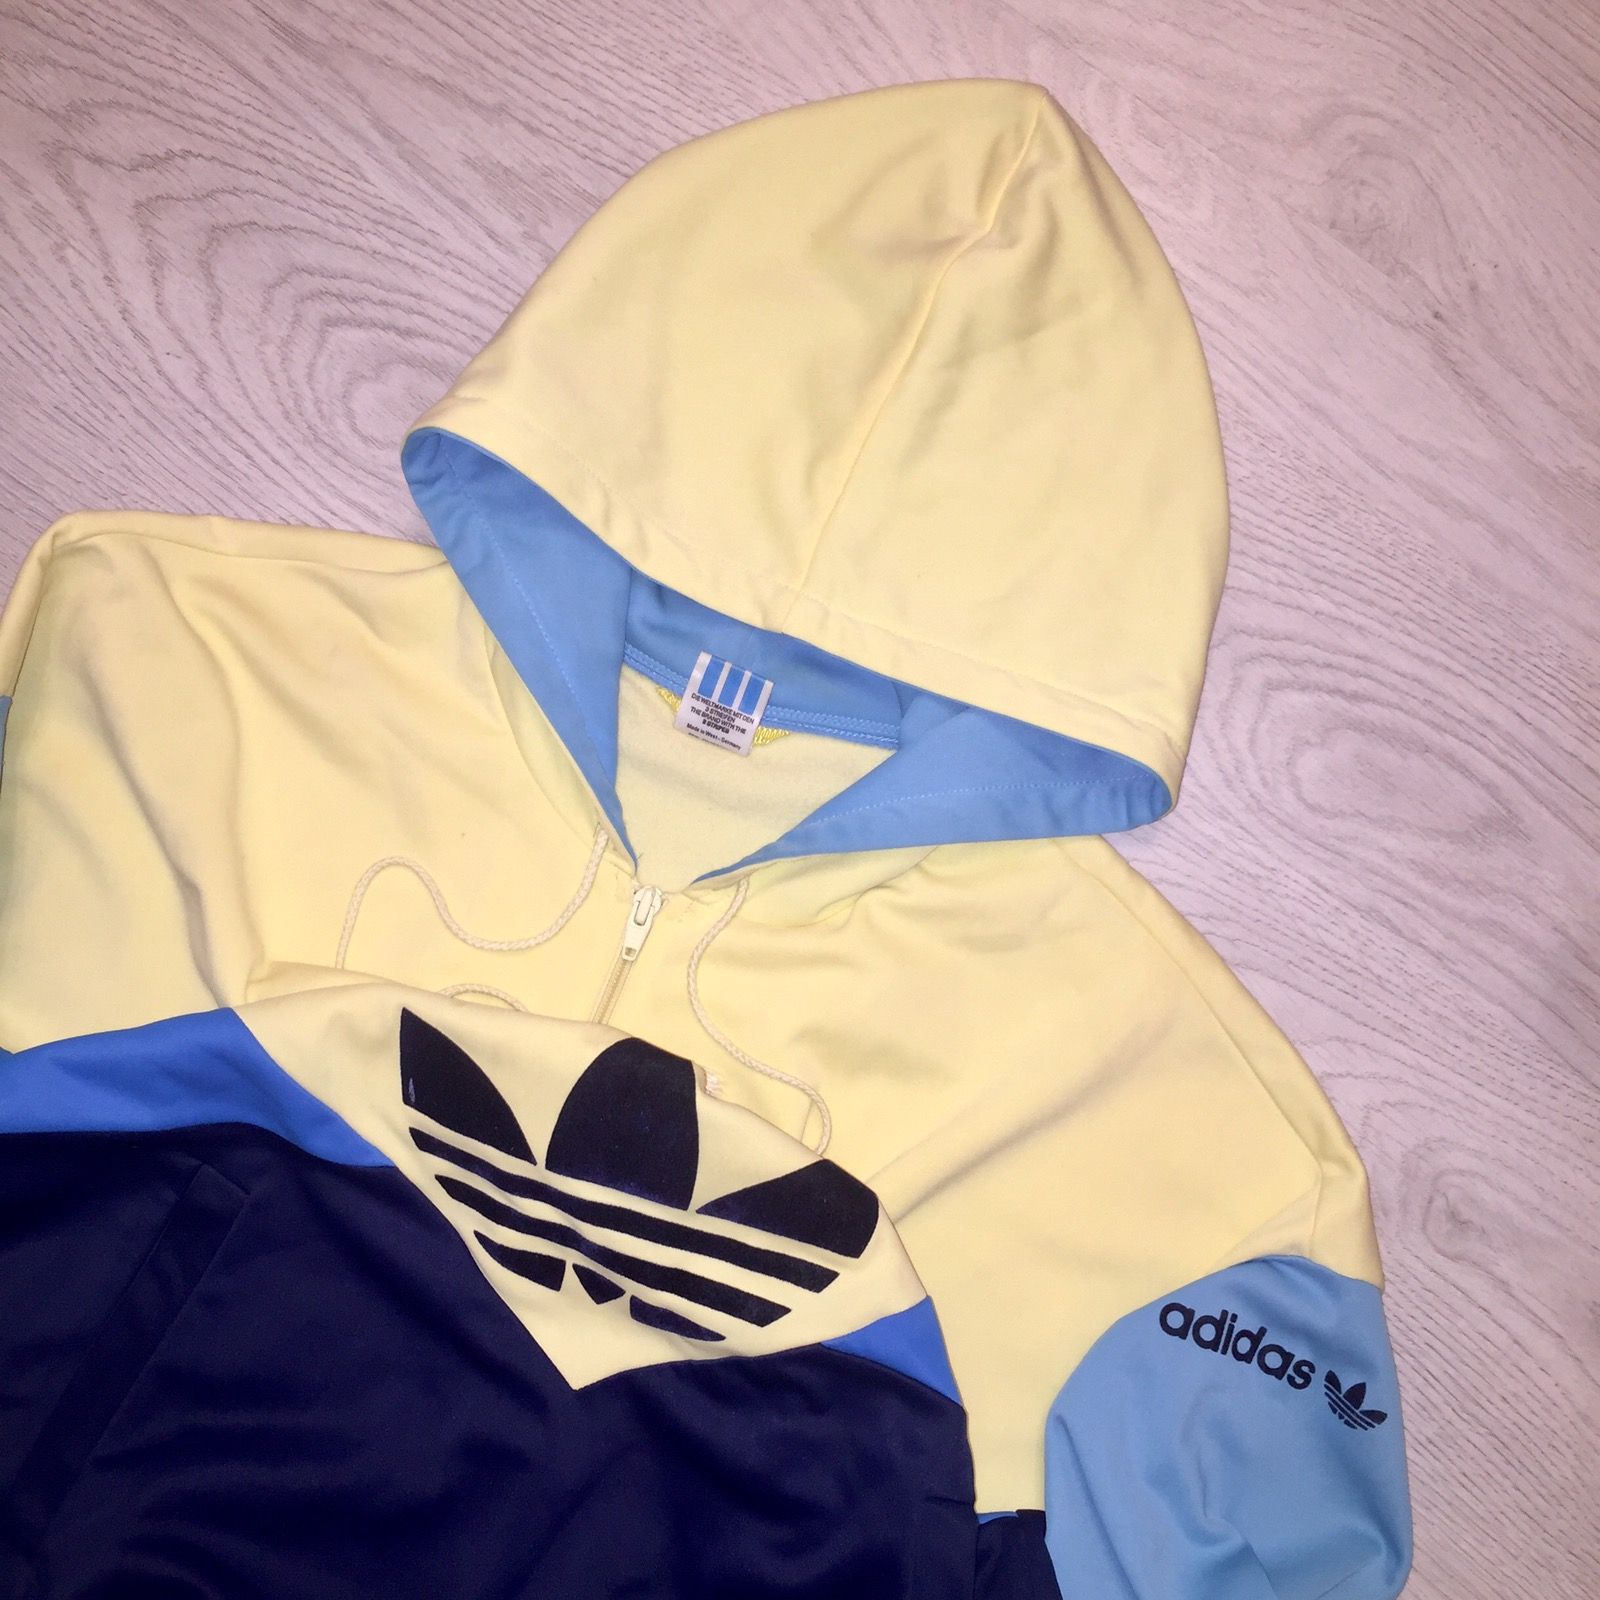 Adidas Vintage ADIDAS Colorado 1970’s 1989’s size M Hoodies Anorak Sweatshirts Zip YKK made in West Germany Yellow Blue Dark Blue Rare Hype Black Size US M / EU 48-50 / 2 - 1 Preview